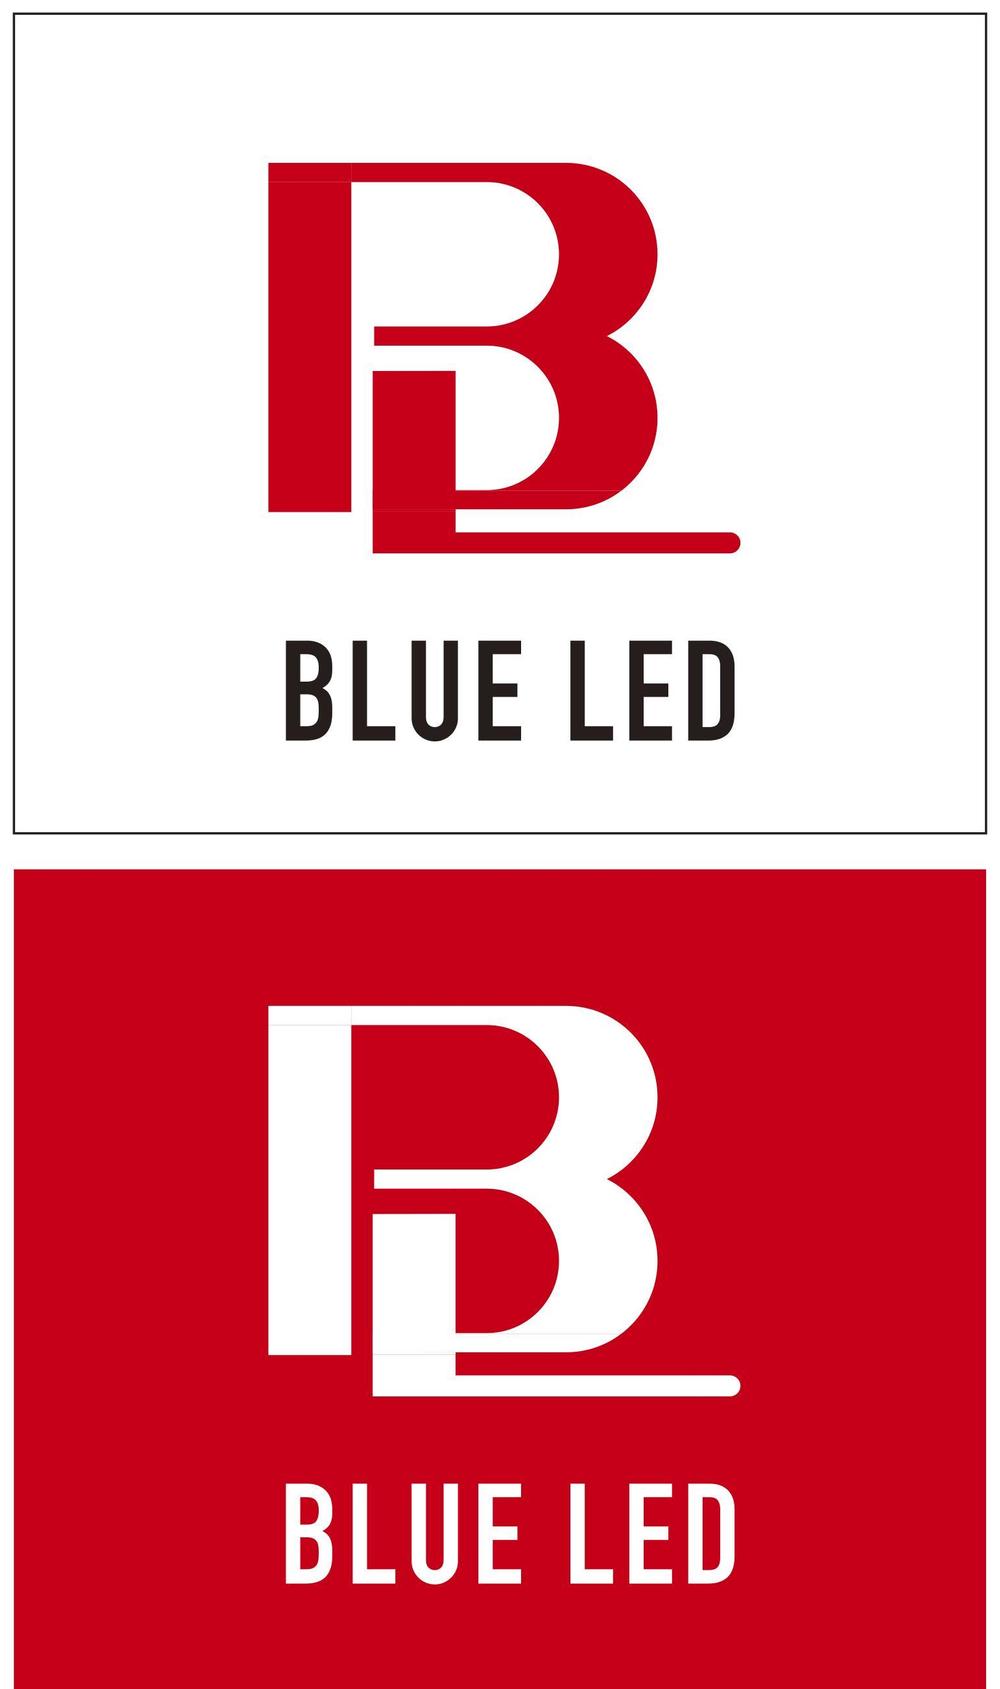 BLUE LED-001 2 2 2 2.jpg